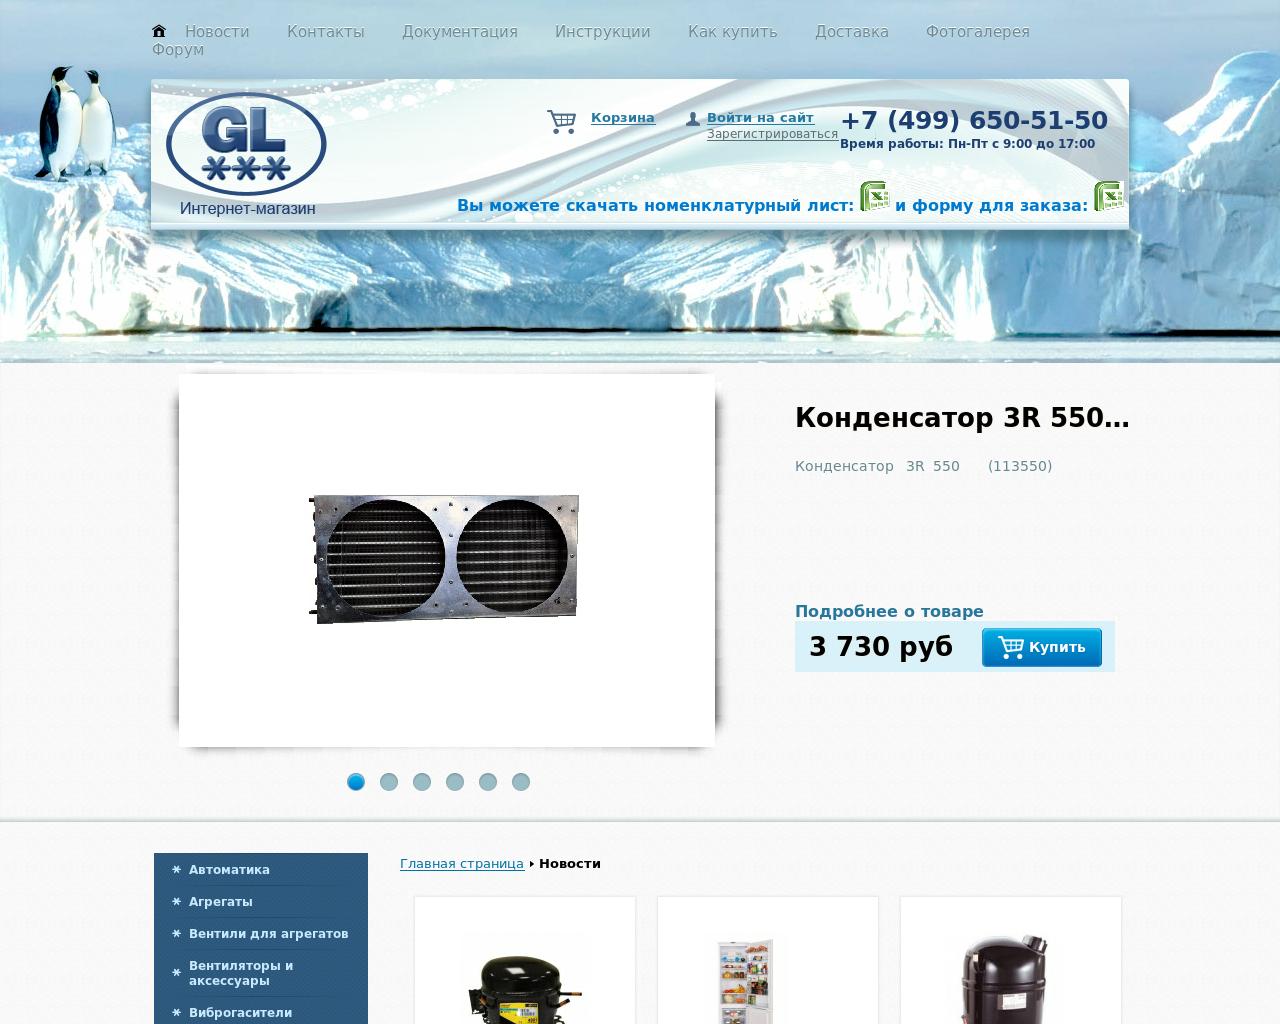 Изображение сайта glorya-holod.ru в разрешении 1280x1024